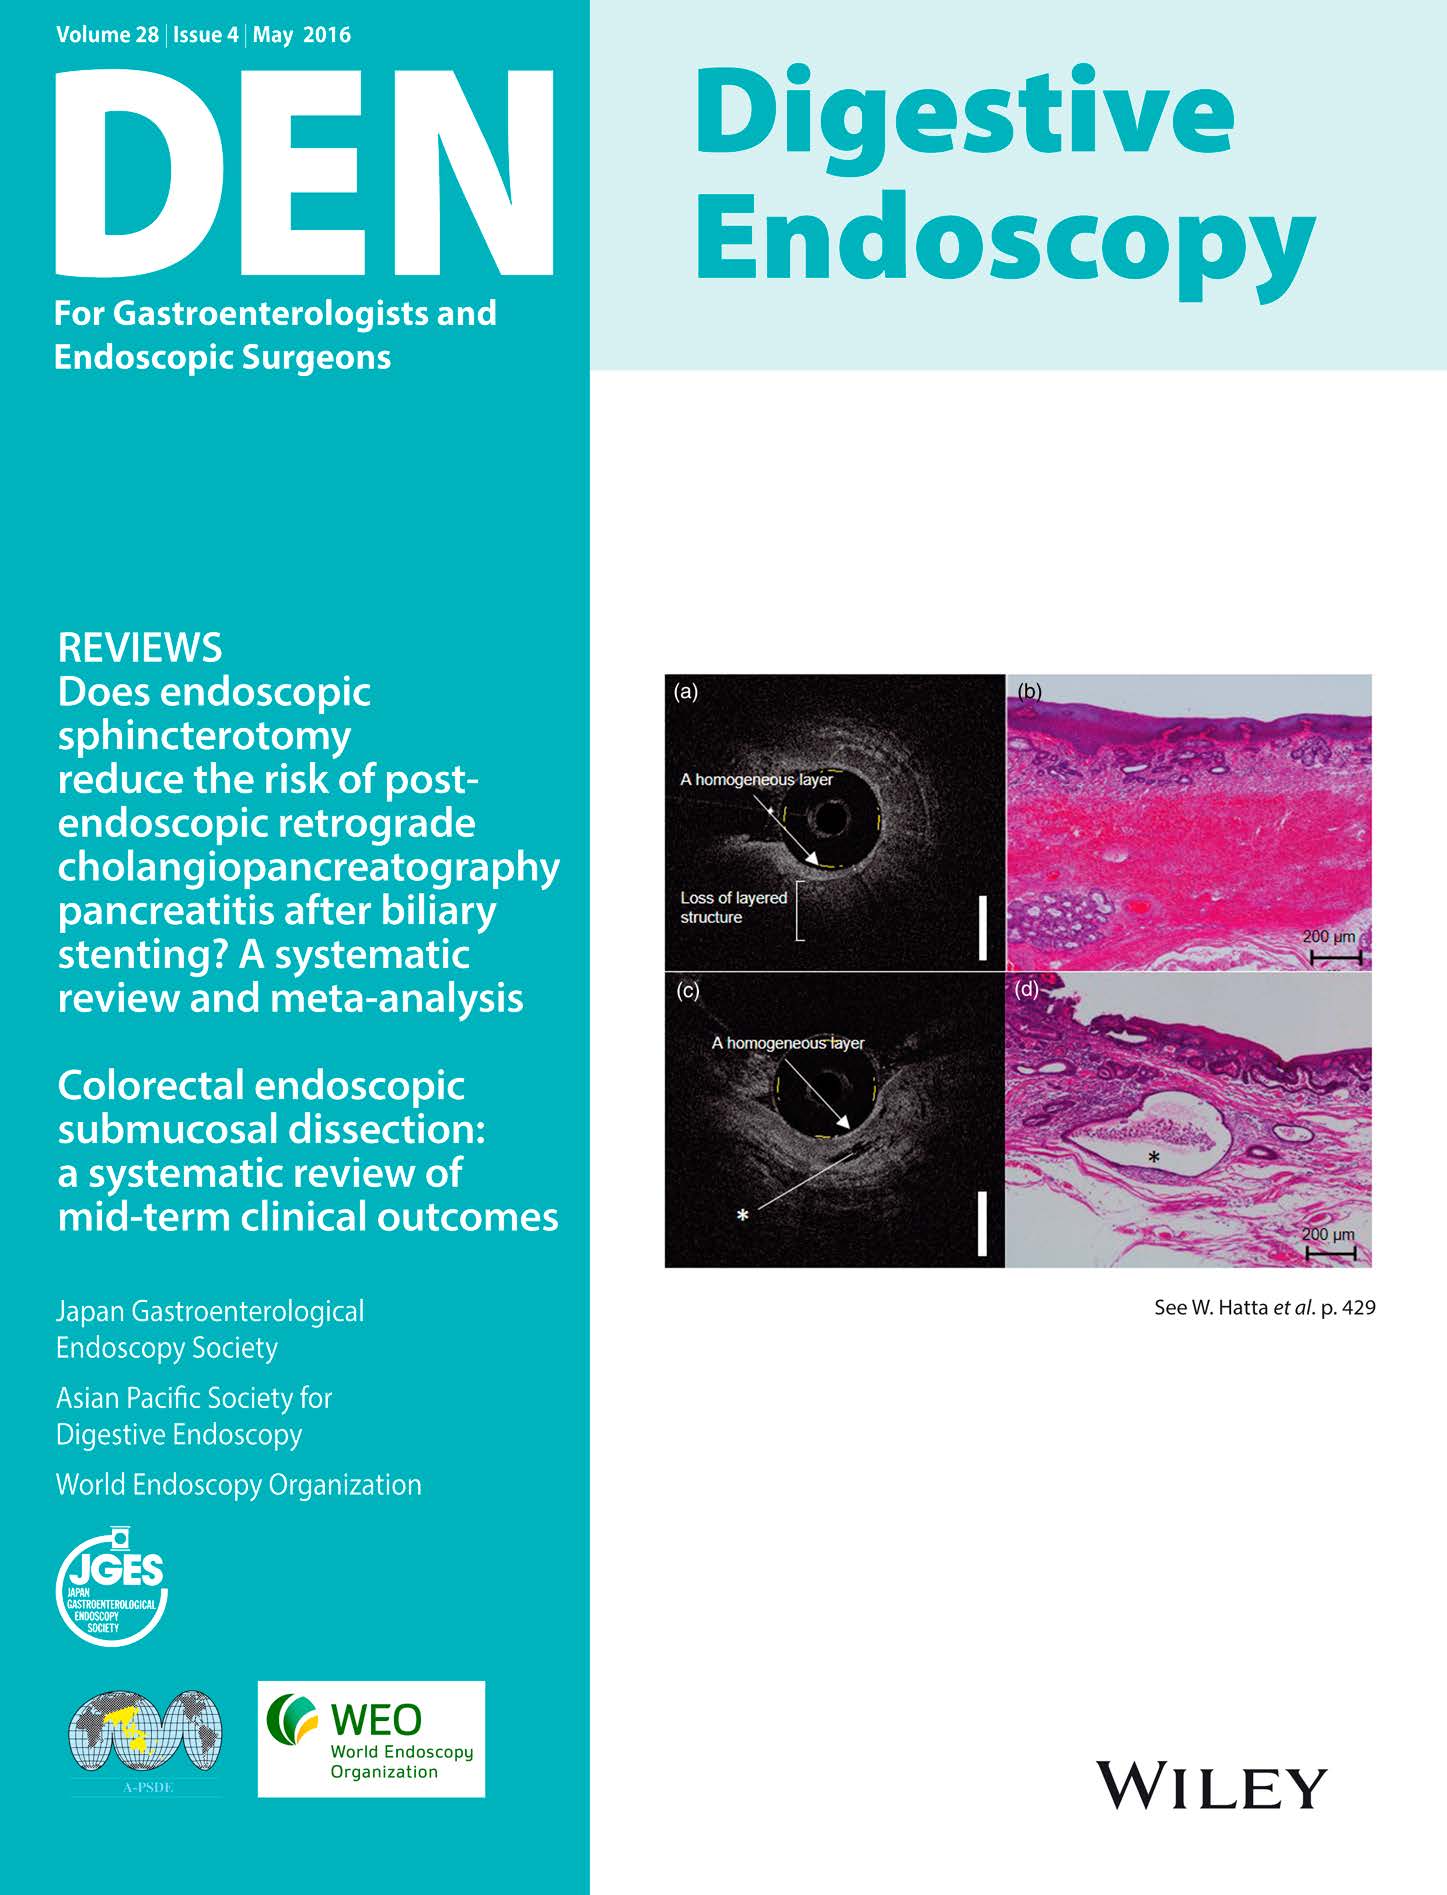 Digestive Endoscopy Vol28-4